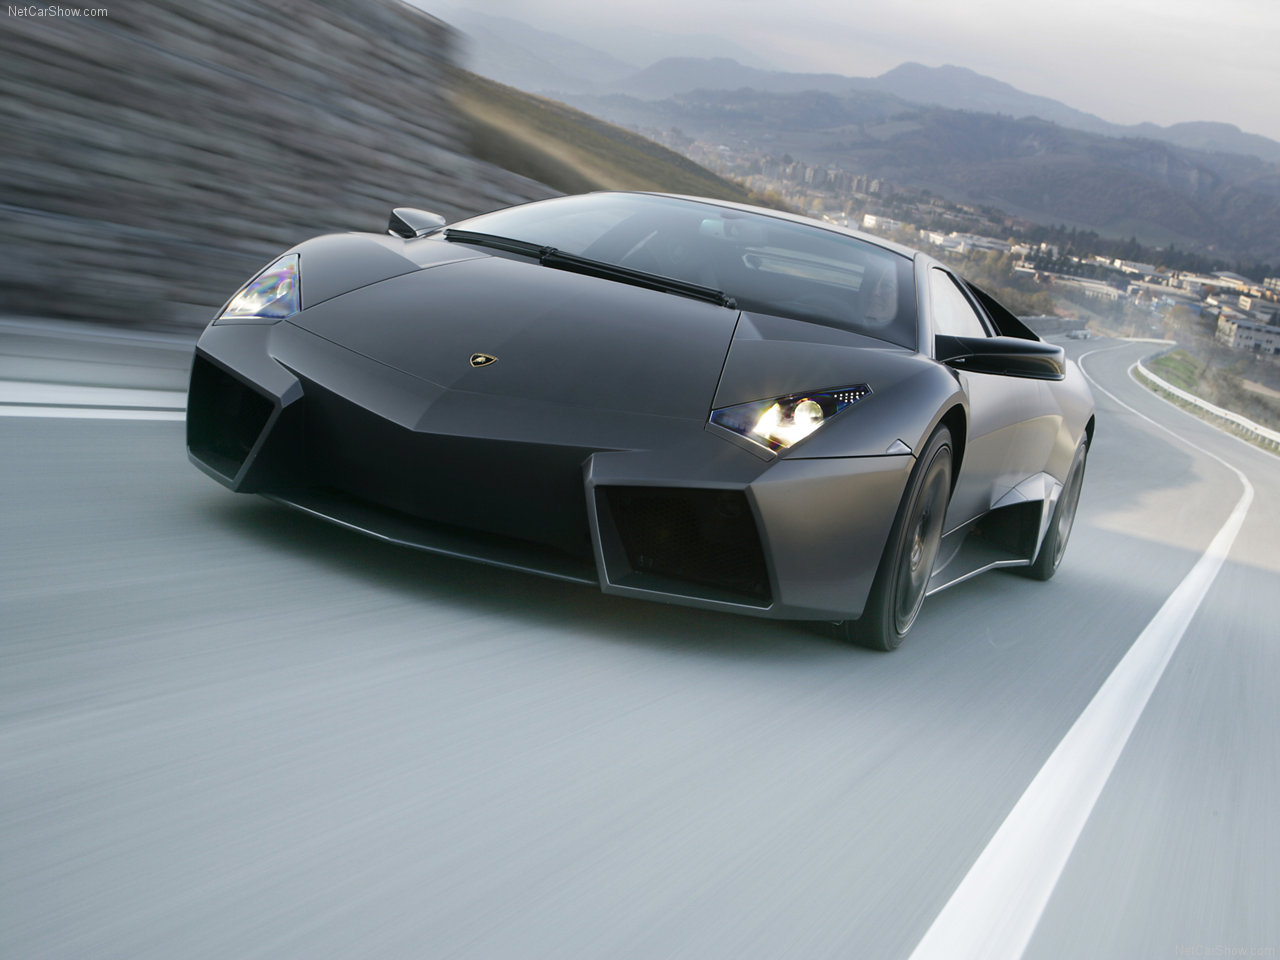 Lamborghini Reventon Wallpapers Hd | Free Wallpapers